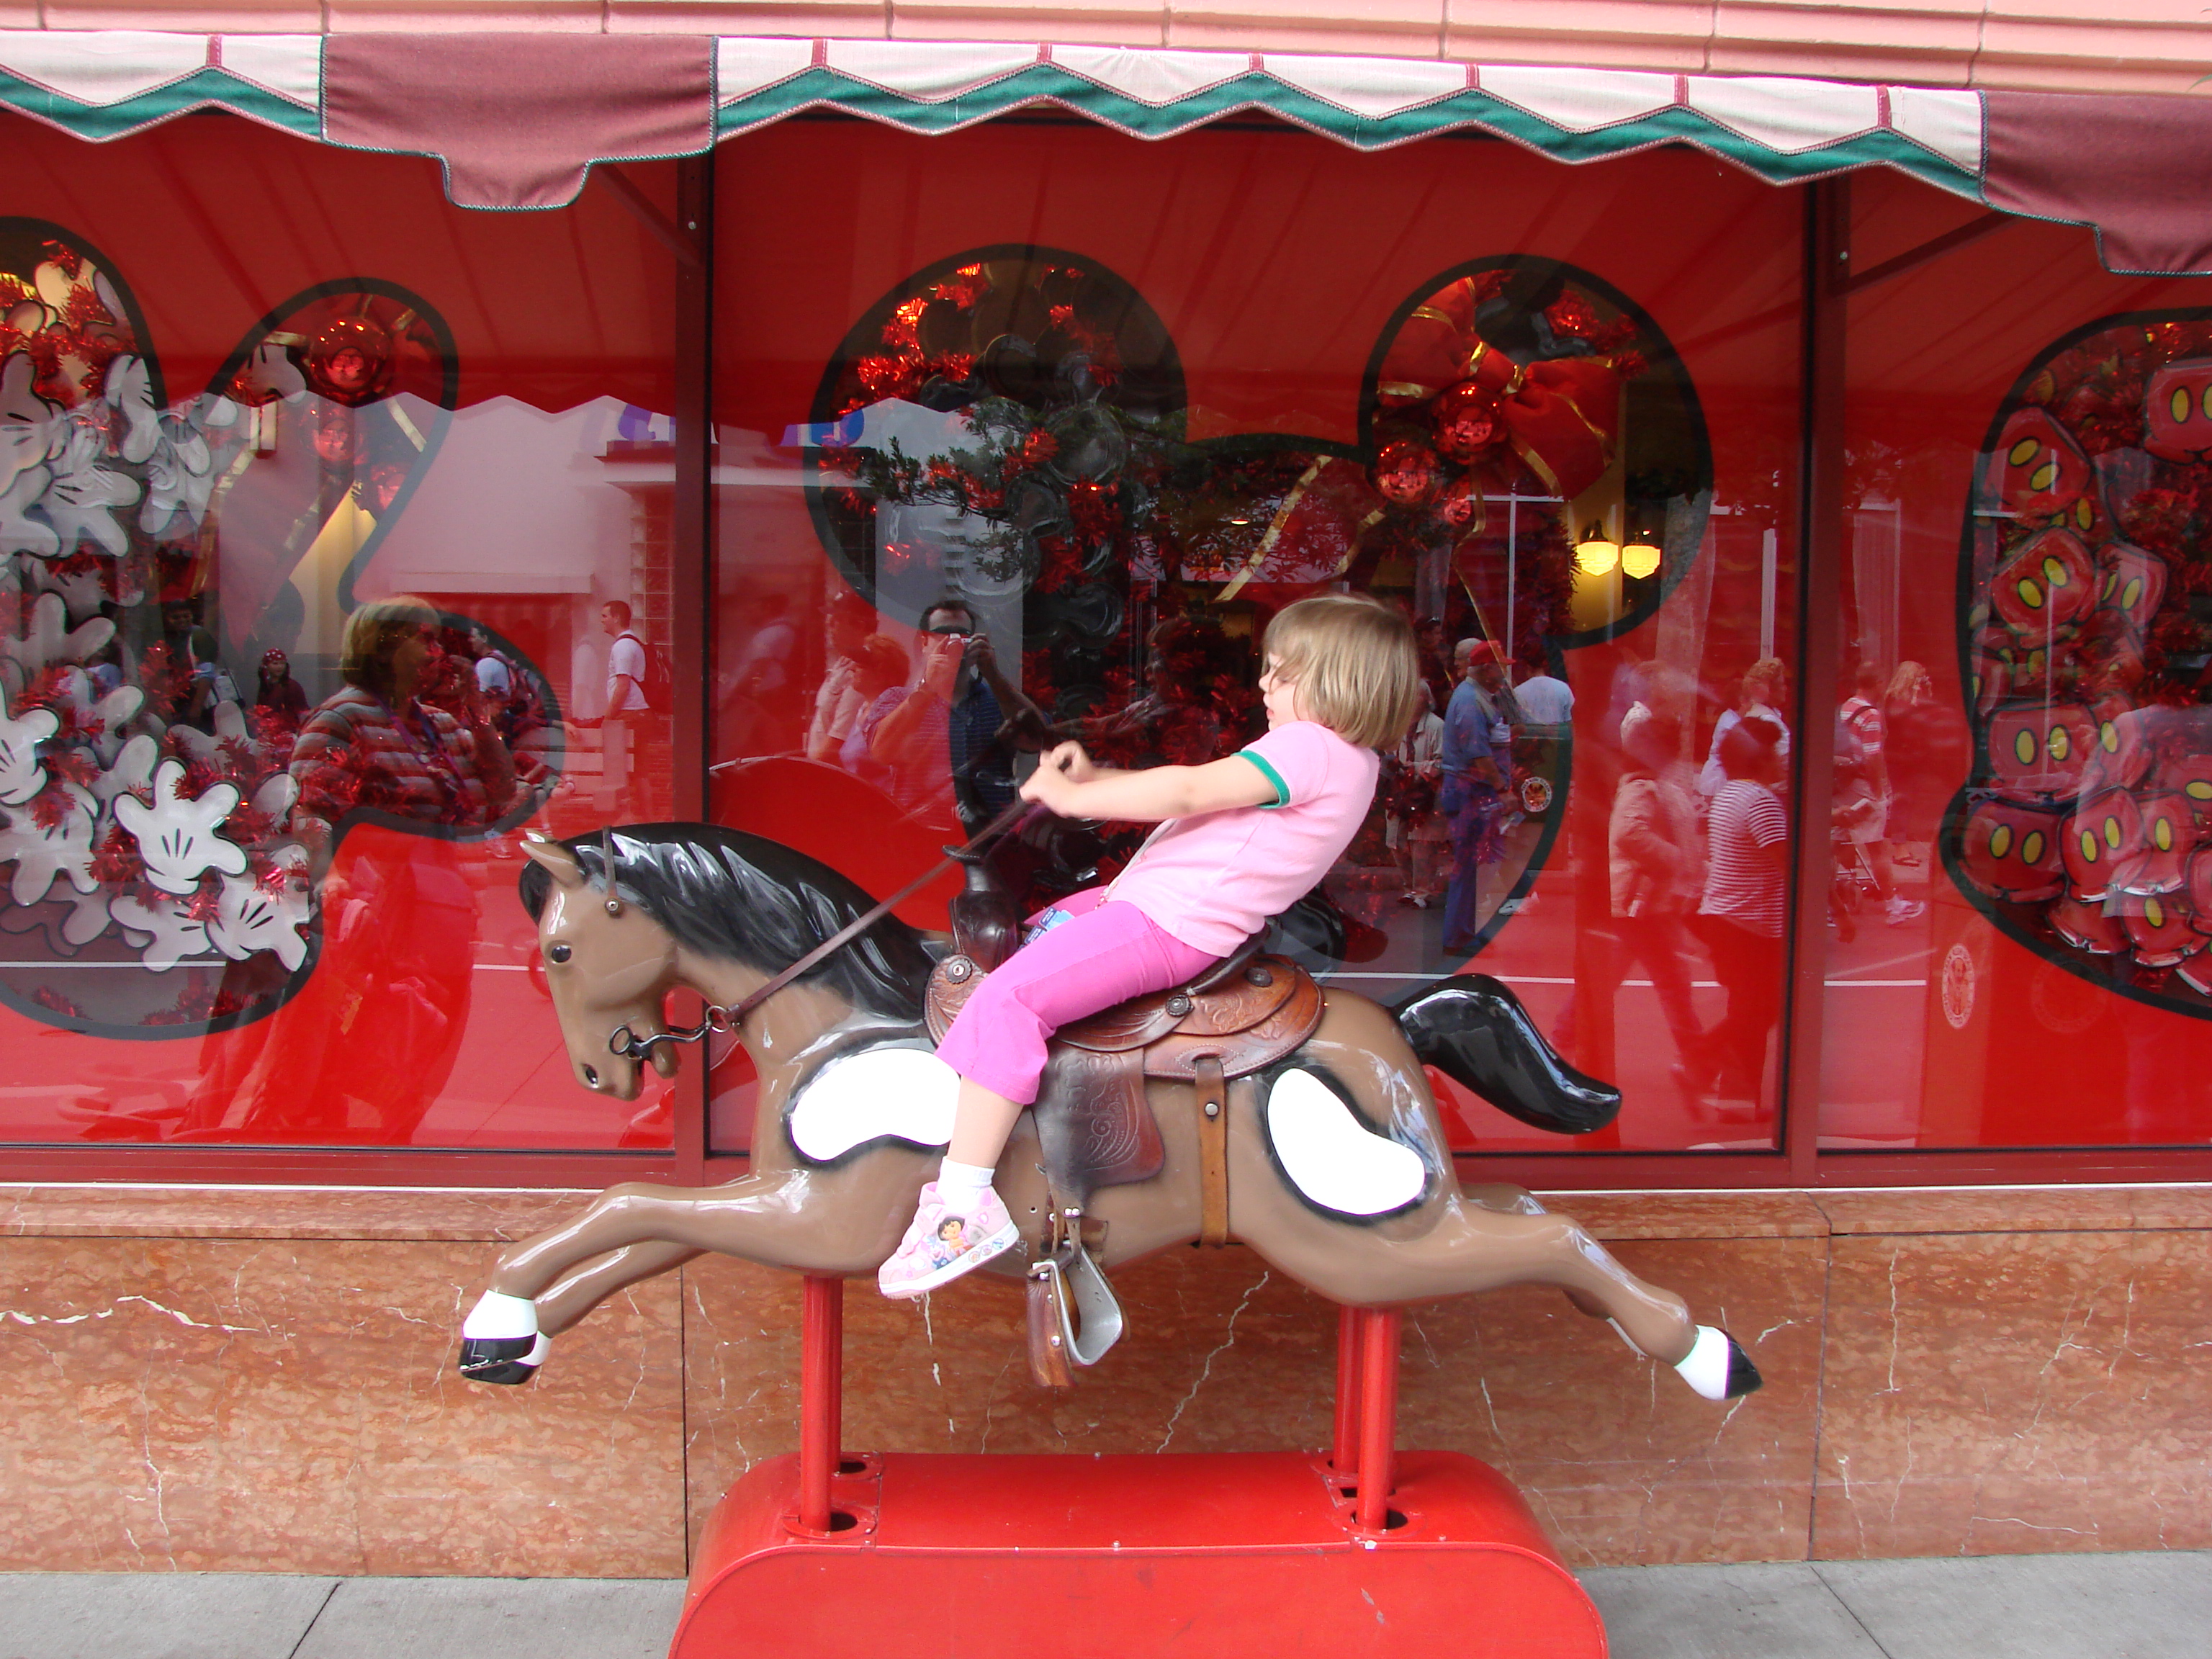 Taking a "joy" ride, Hollywood style :-)